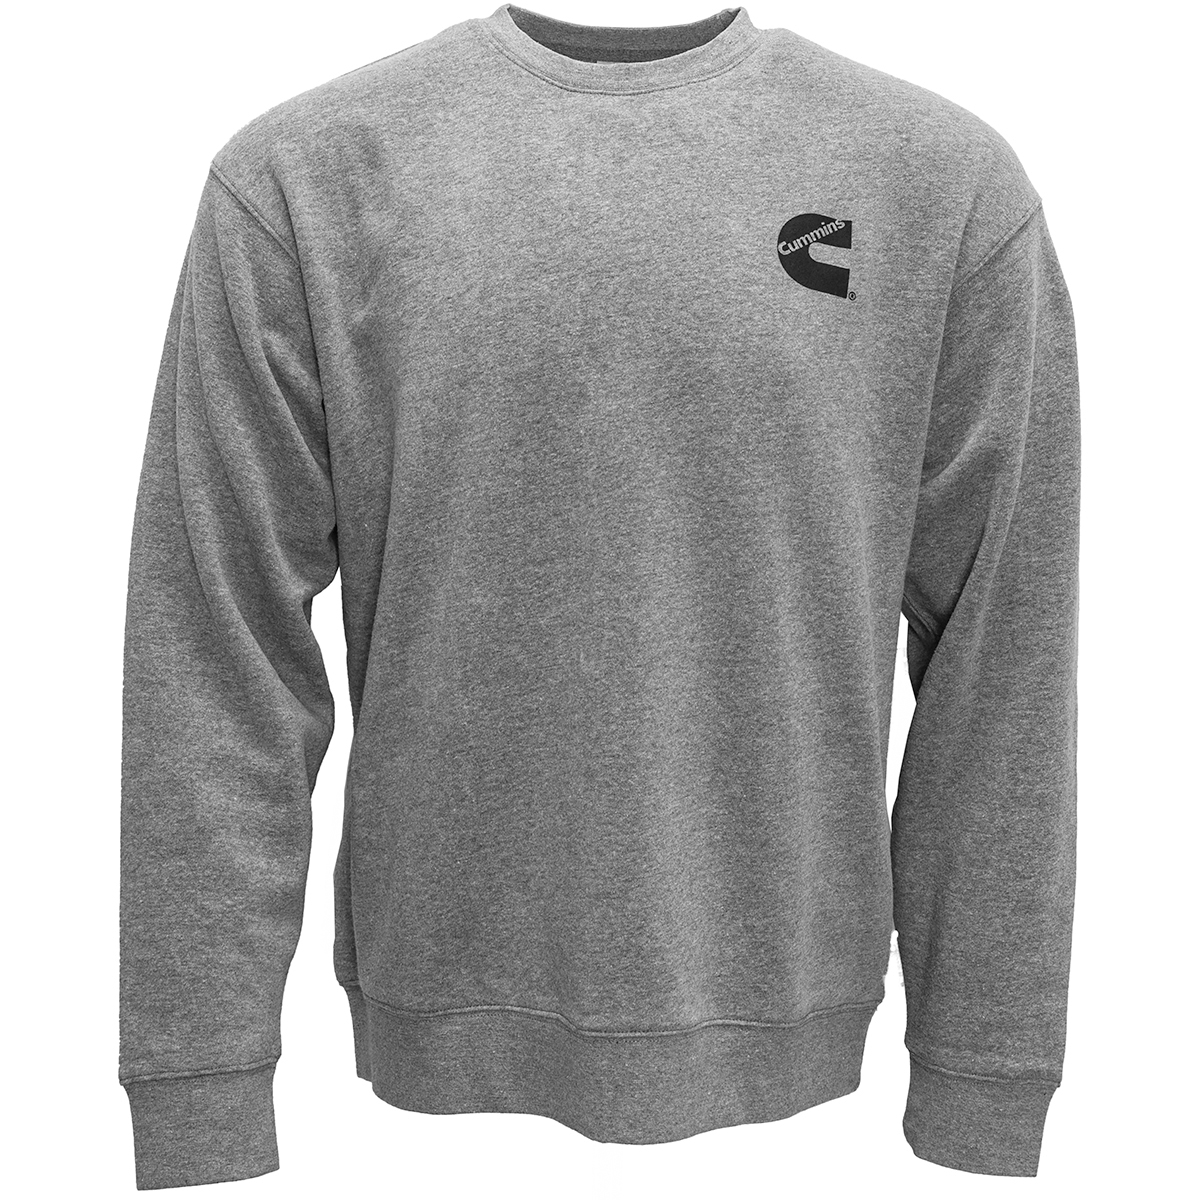 Cummins Unisex Fleece Crewneck Sweatshirt Gray in Comfy Cotton Blend 4XL CMN5028